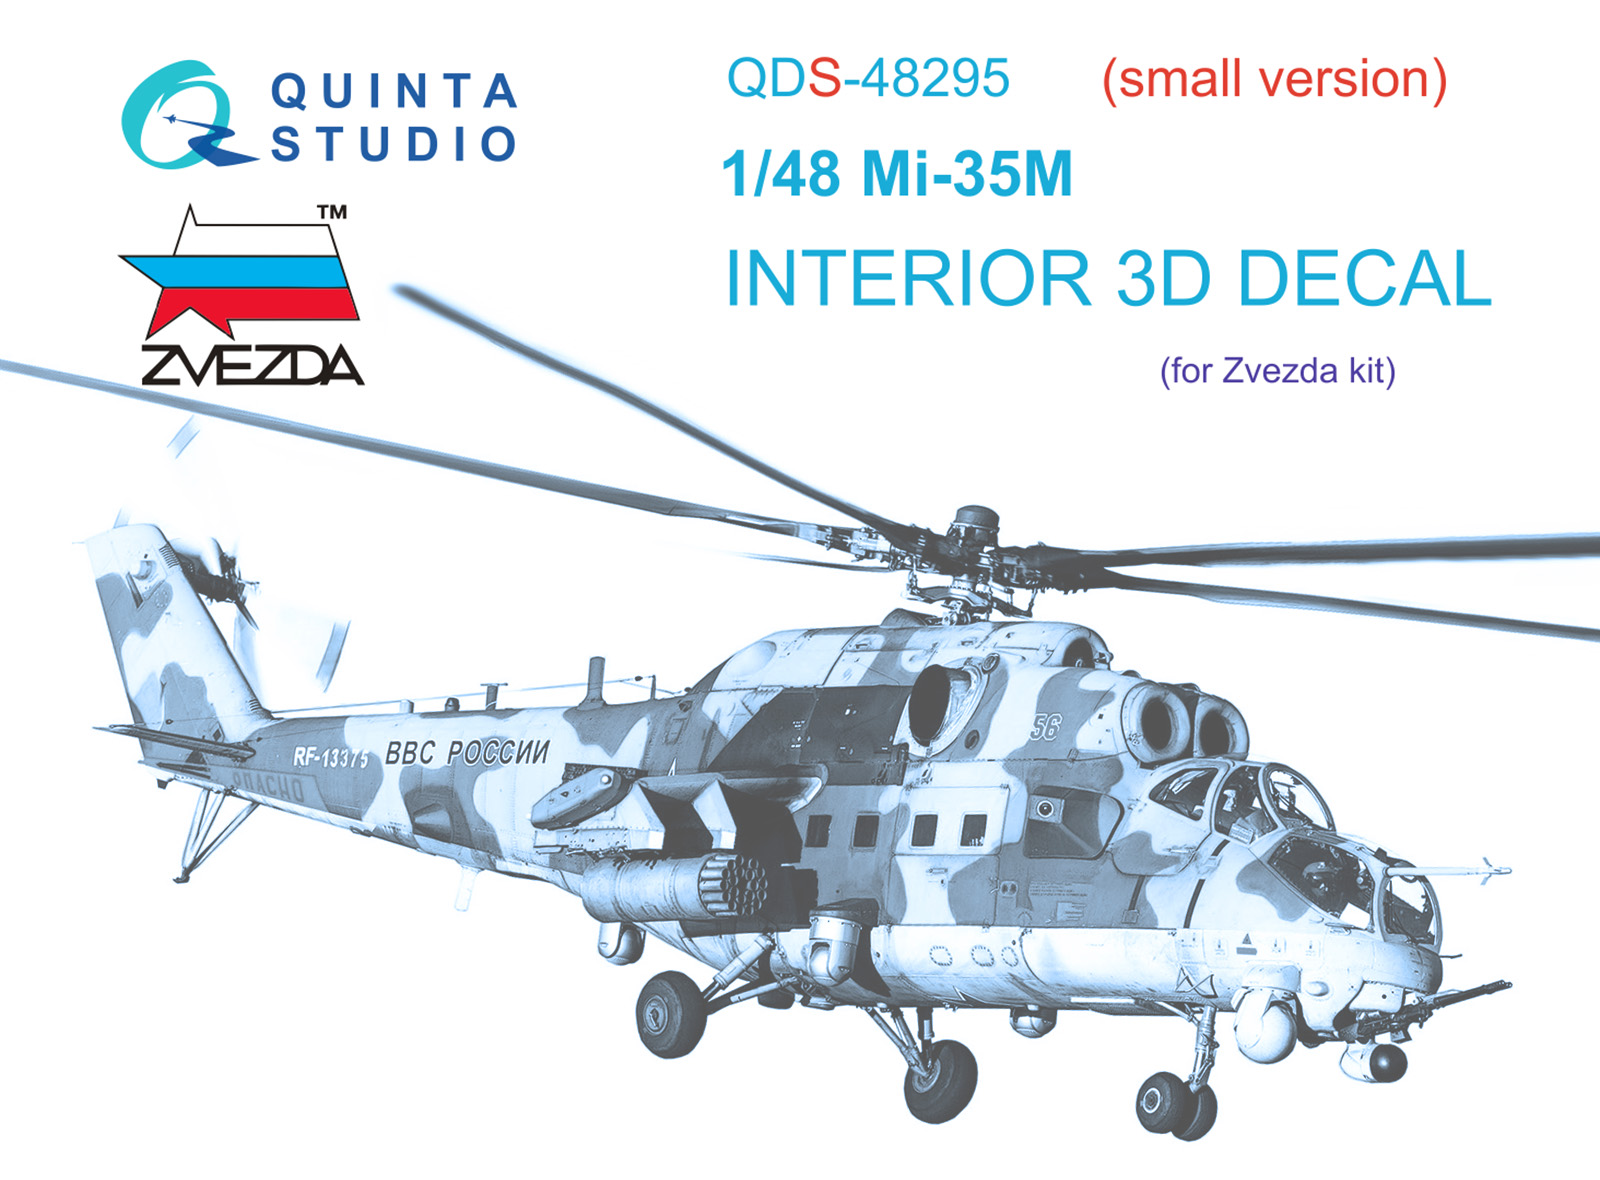 3D Decal for Mi-35M (Zvezda) cockpit interior (Small version)